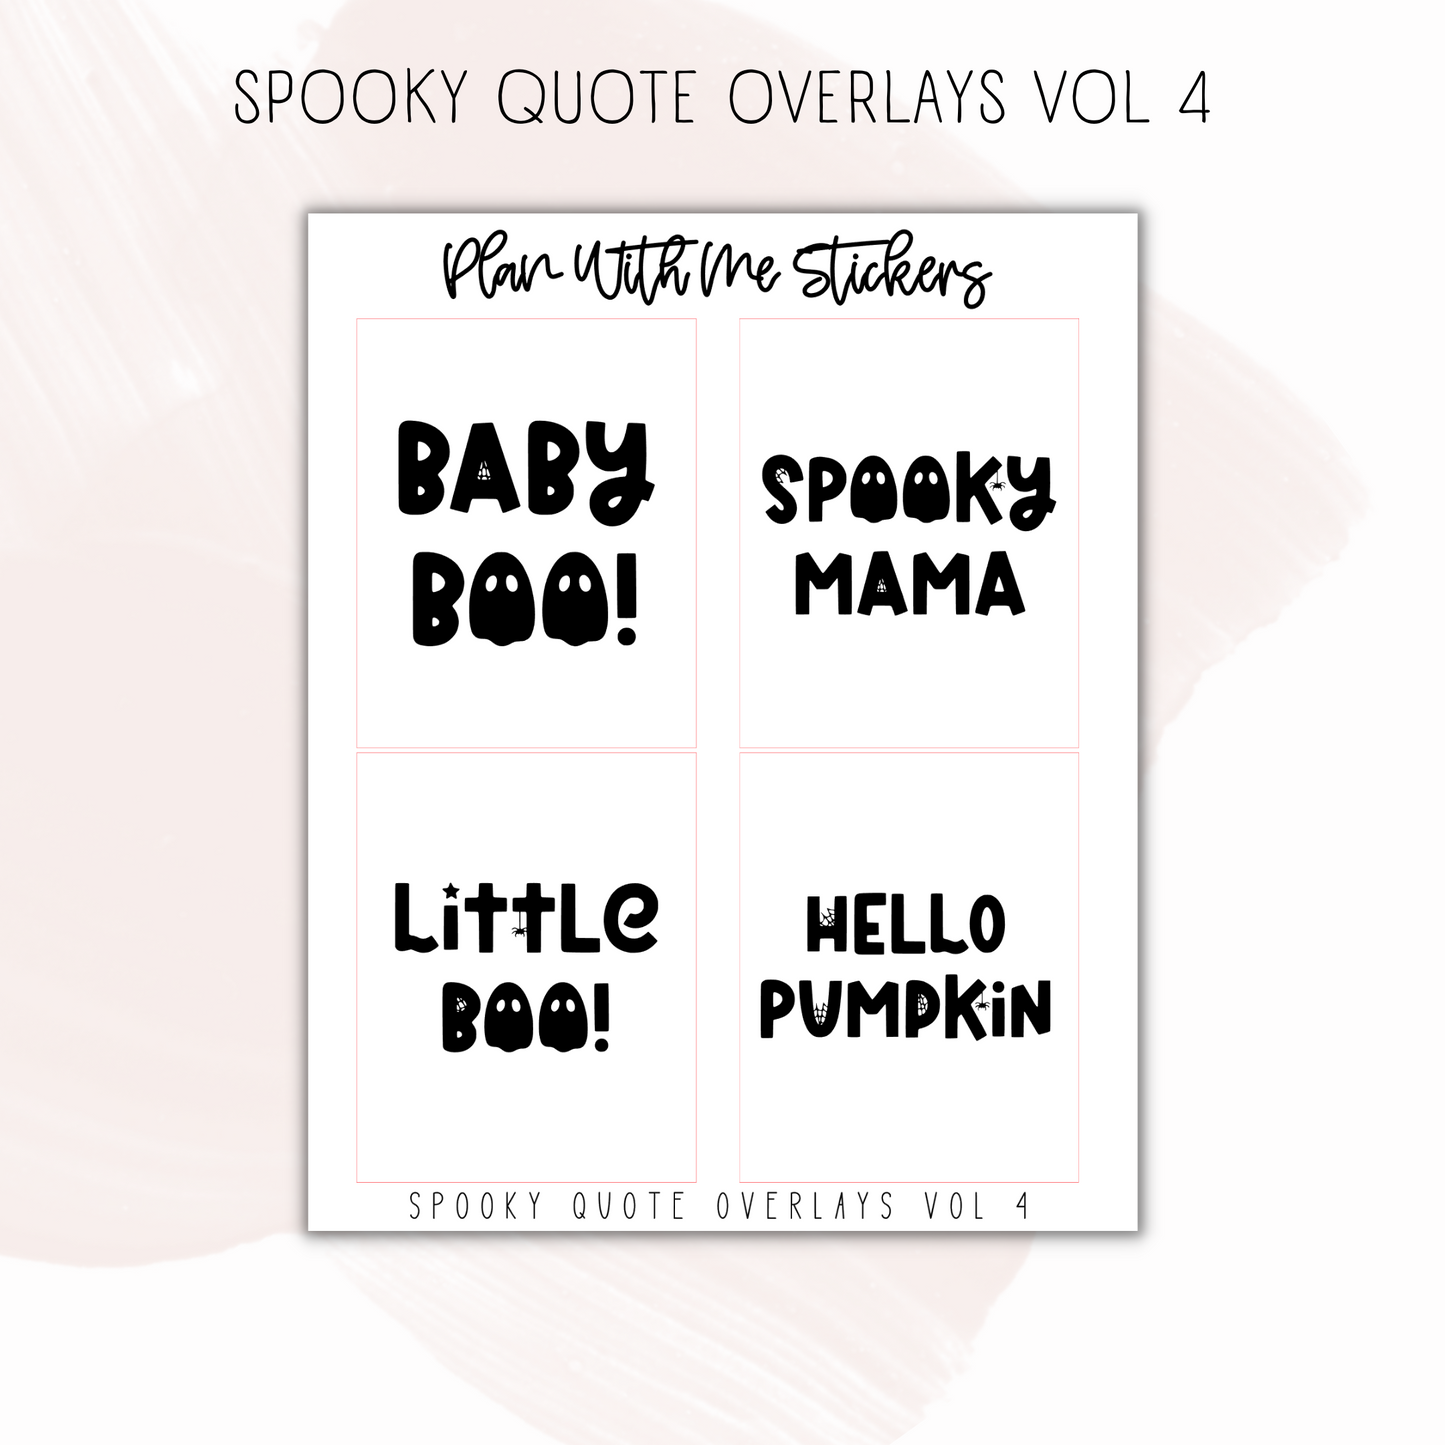 Spooky Quote Overlays Vol 4